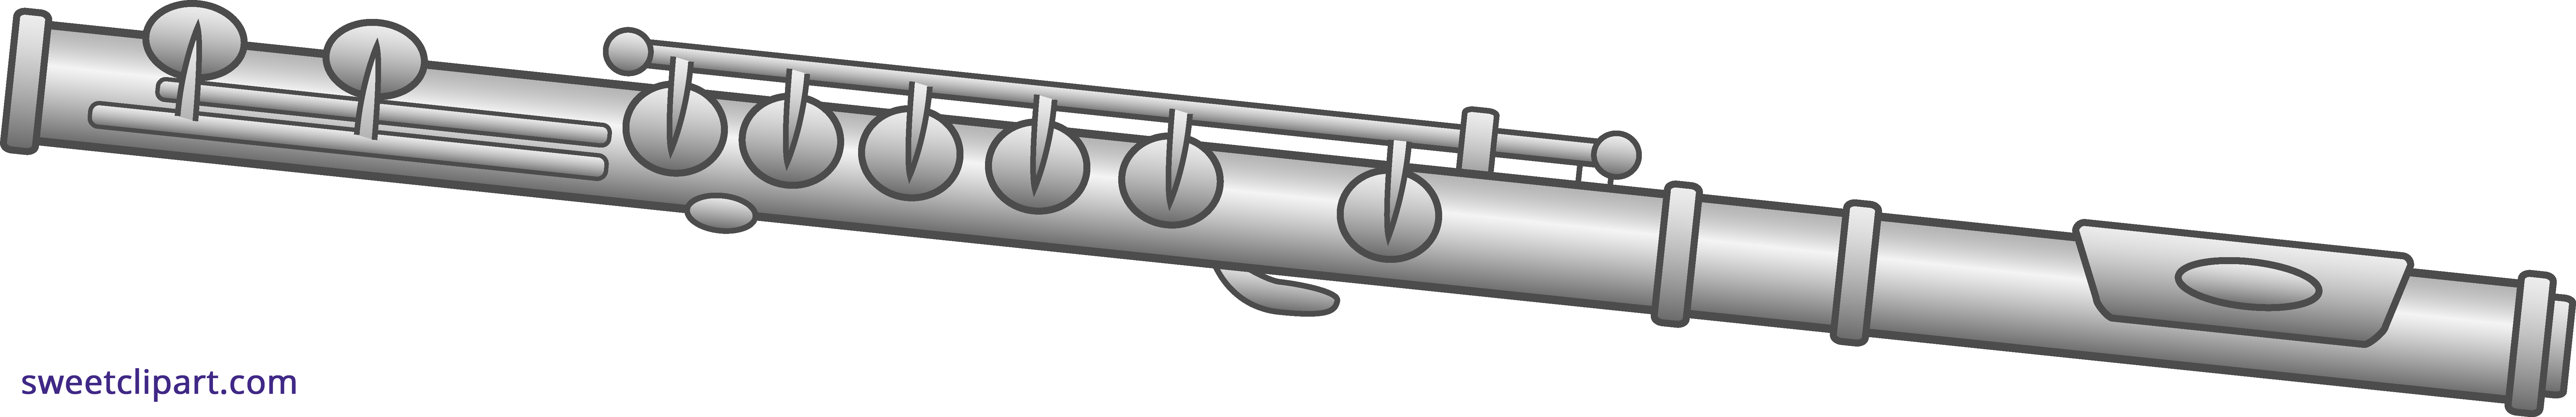 instruments clipart flute